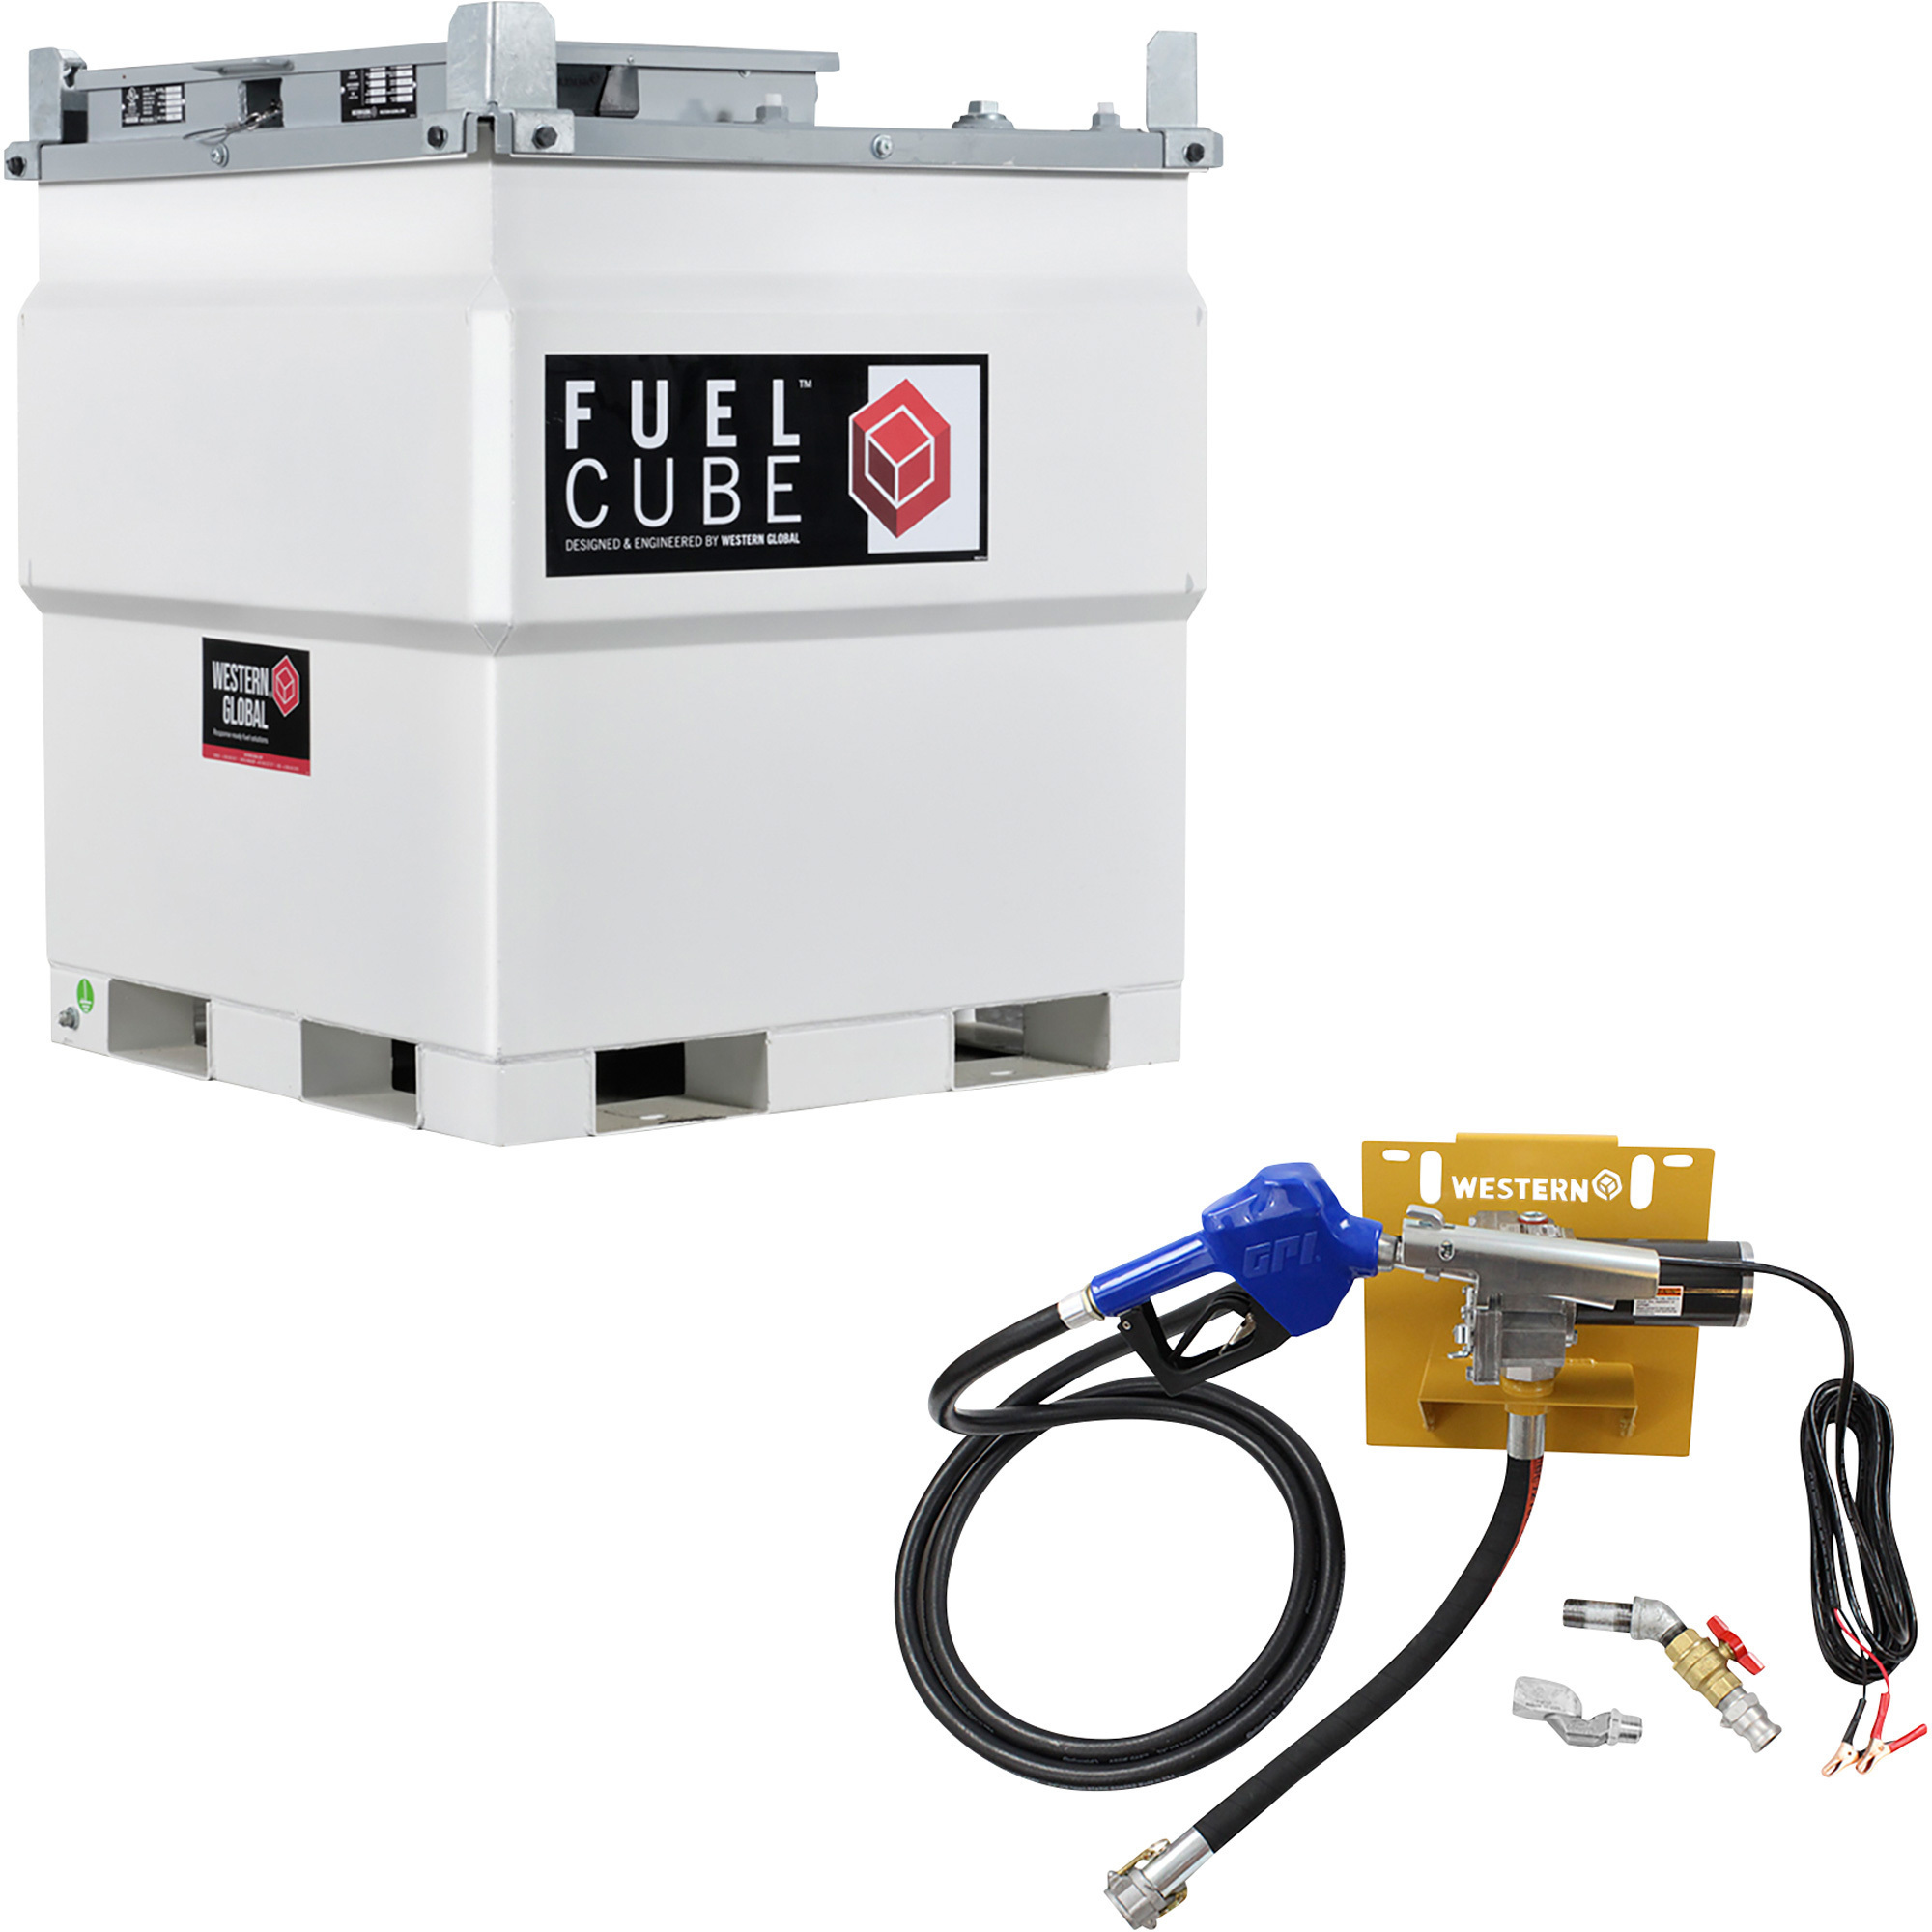 Western Global Diesel FuelCube Tank Kit with Pump and Fuel Level Gauge, Model FCPWN0250-01215GP-SNN